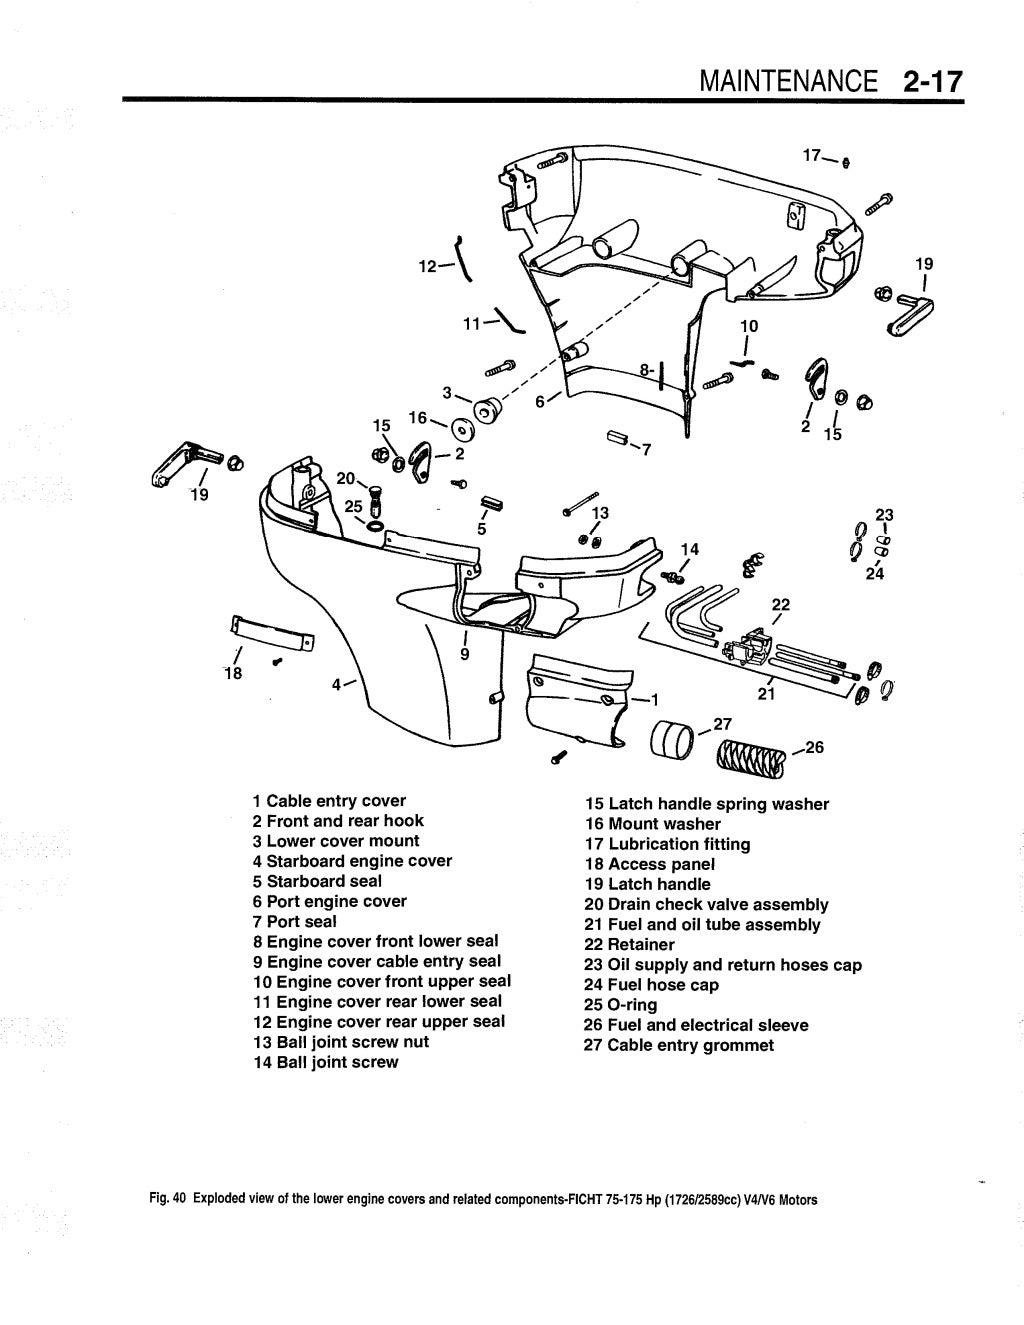 1993 Johnson Evinrude Outboard 185 HP Service Repair Manual